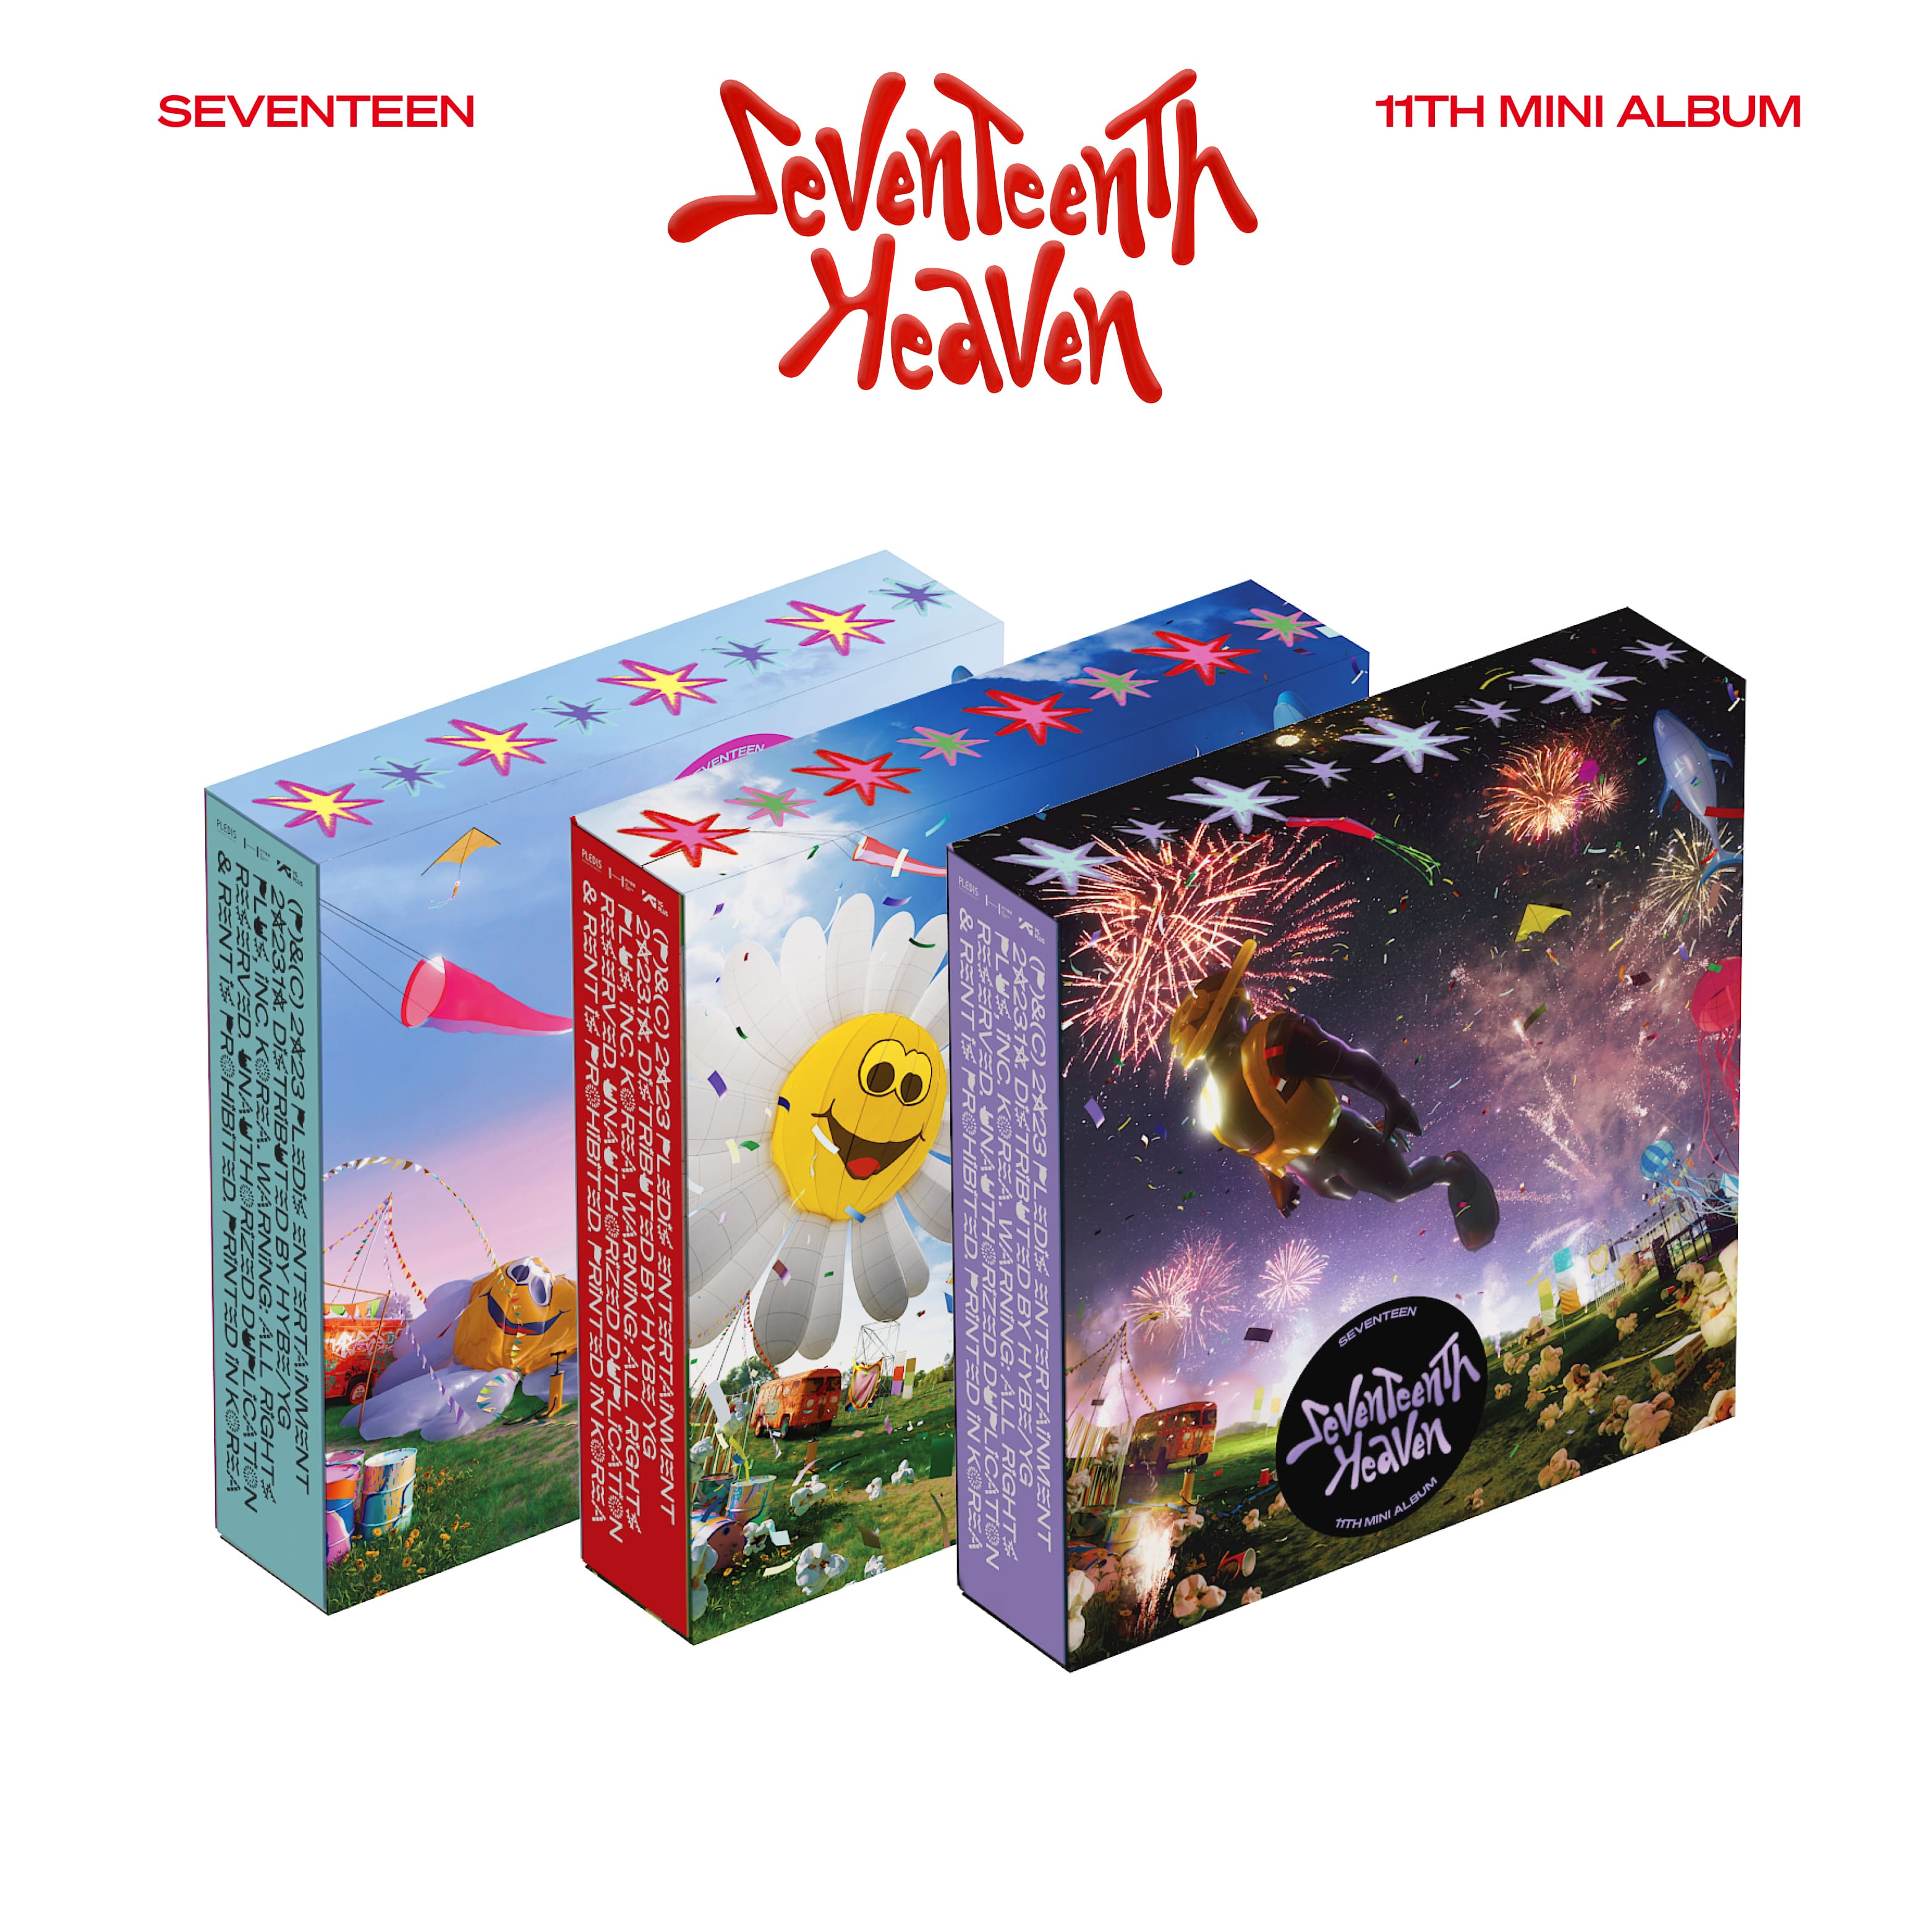 signed-seventeen-11th-mini-album-seventeenth-heaven-kpop-nw